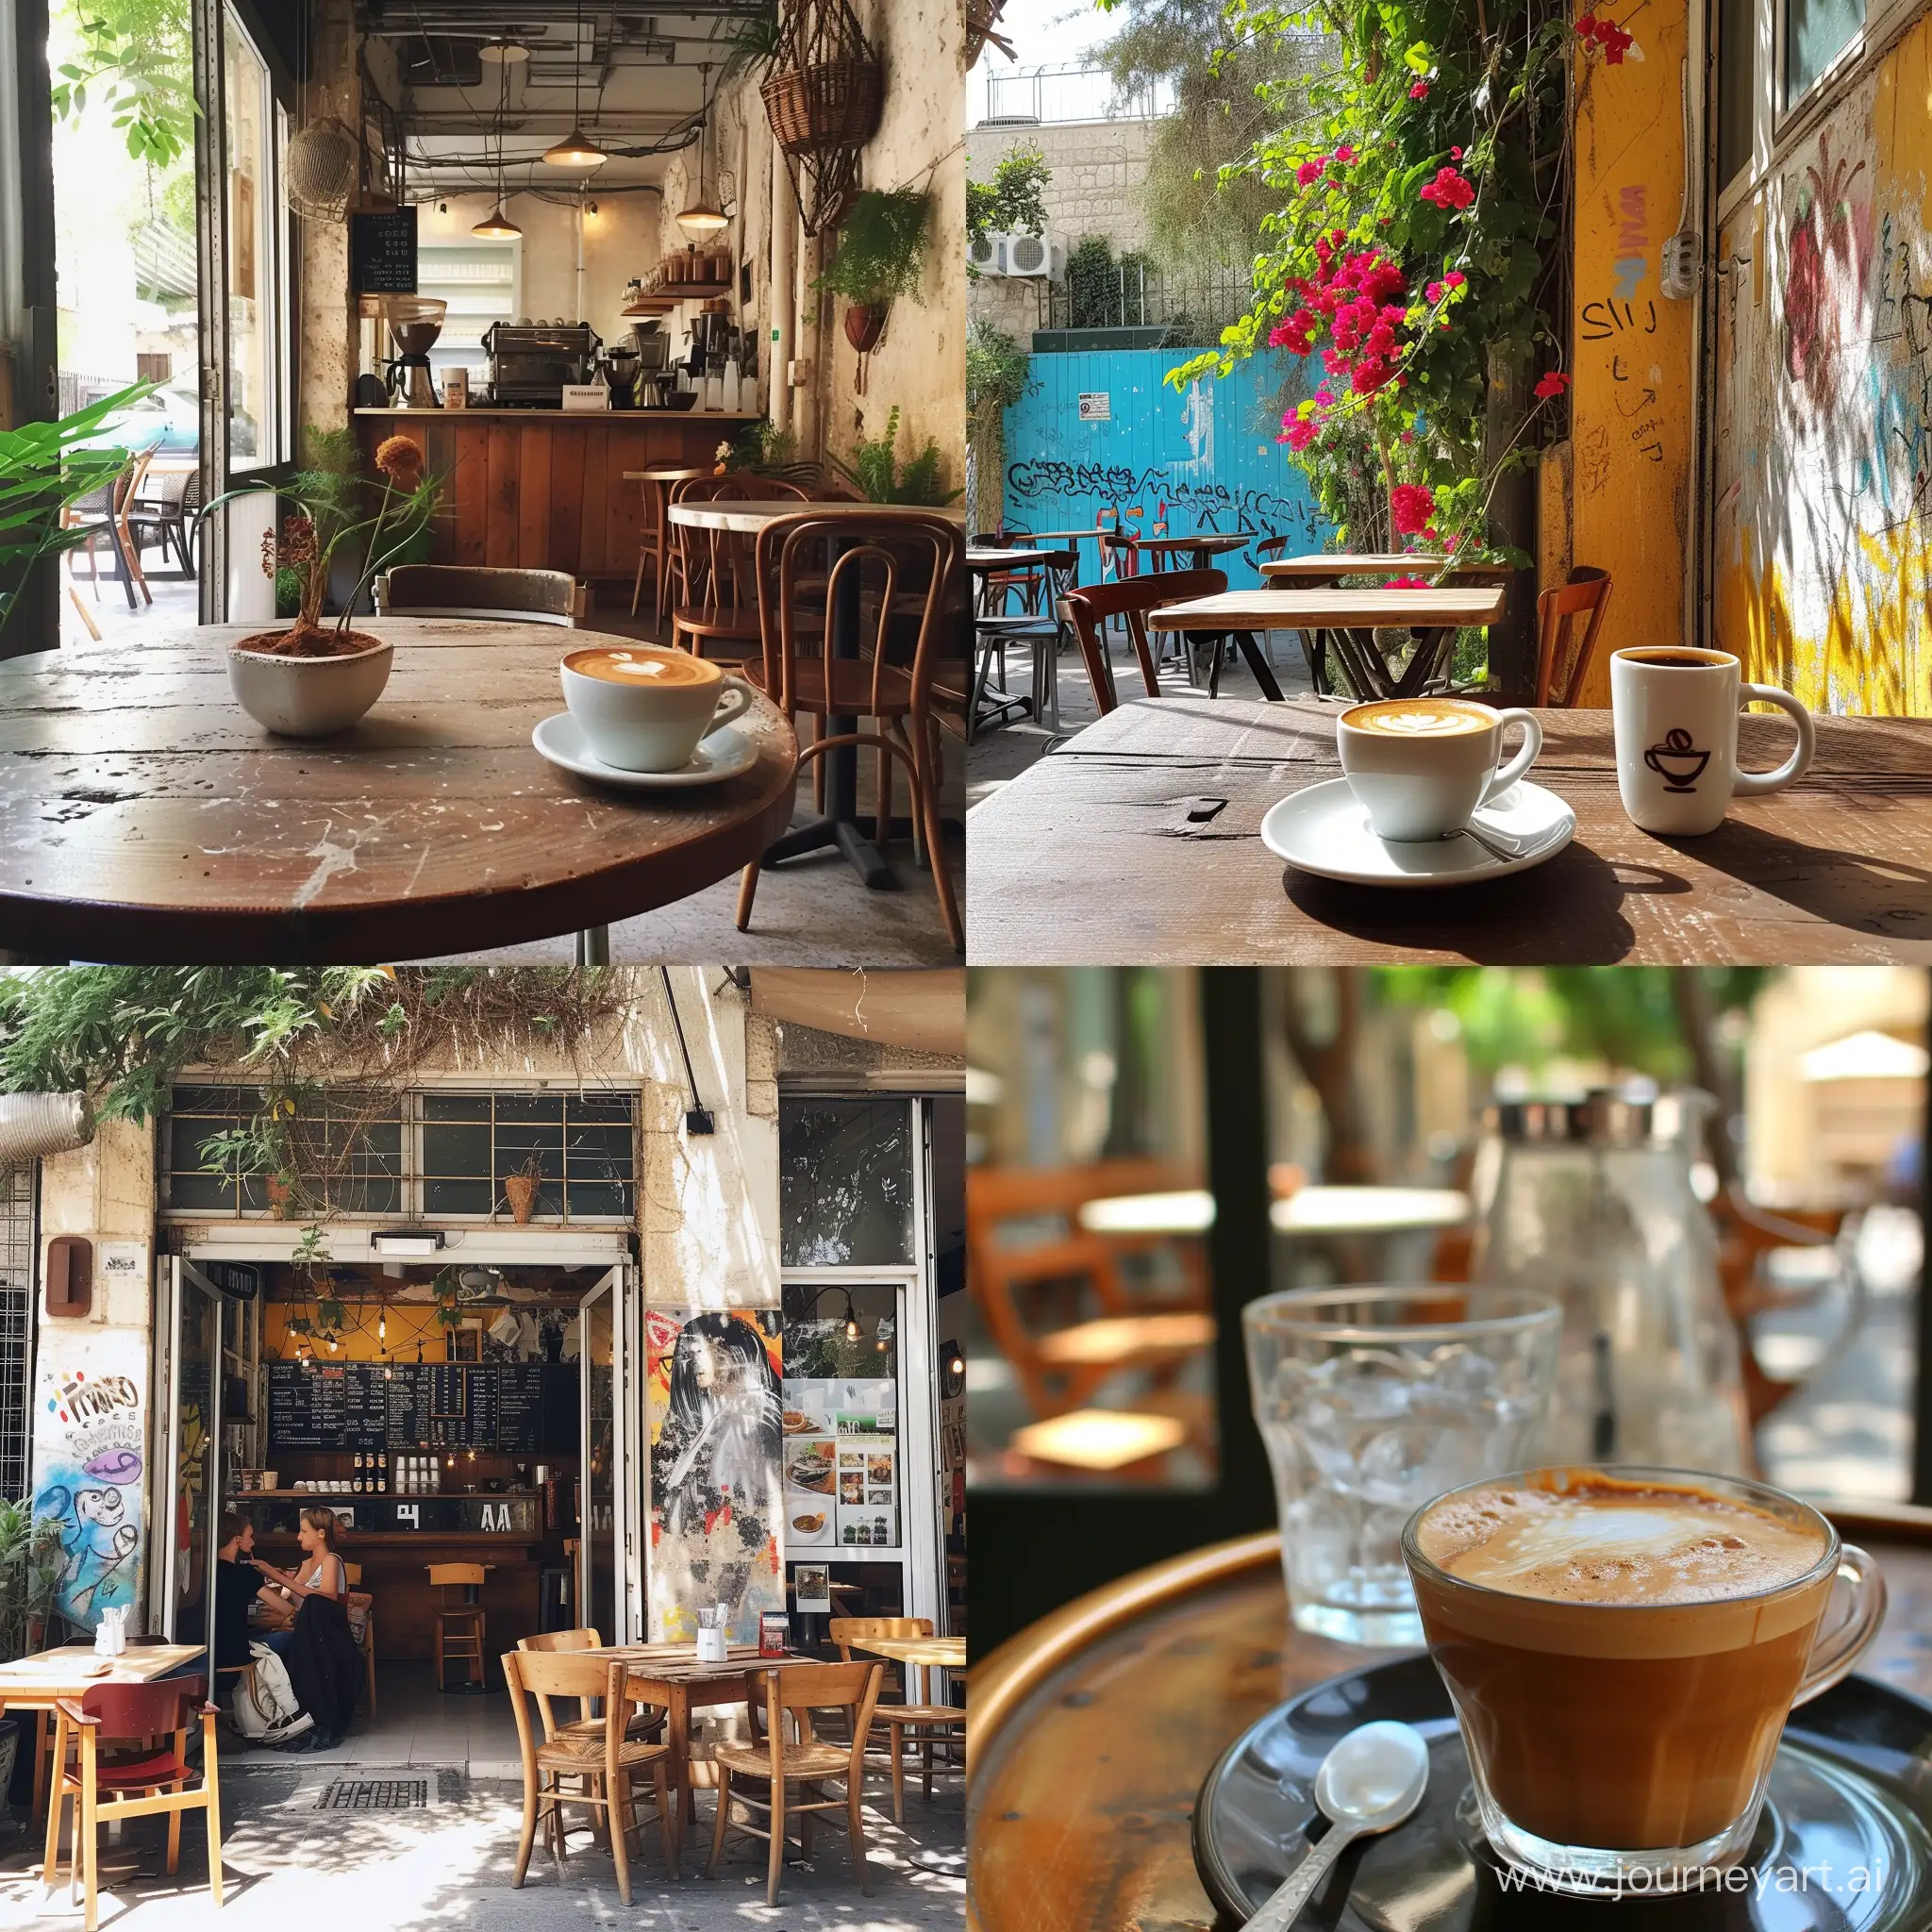 Tel-Aviv-Coffee-Scene-in-Vibrant-Summer-Atmosphere